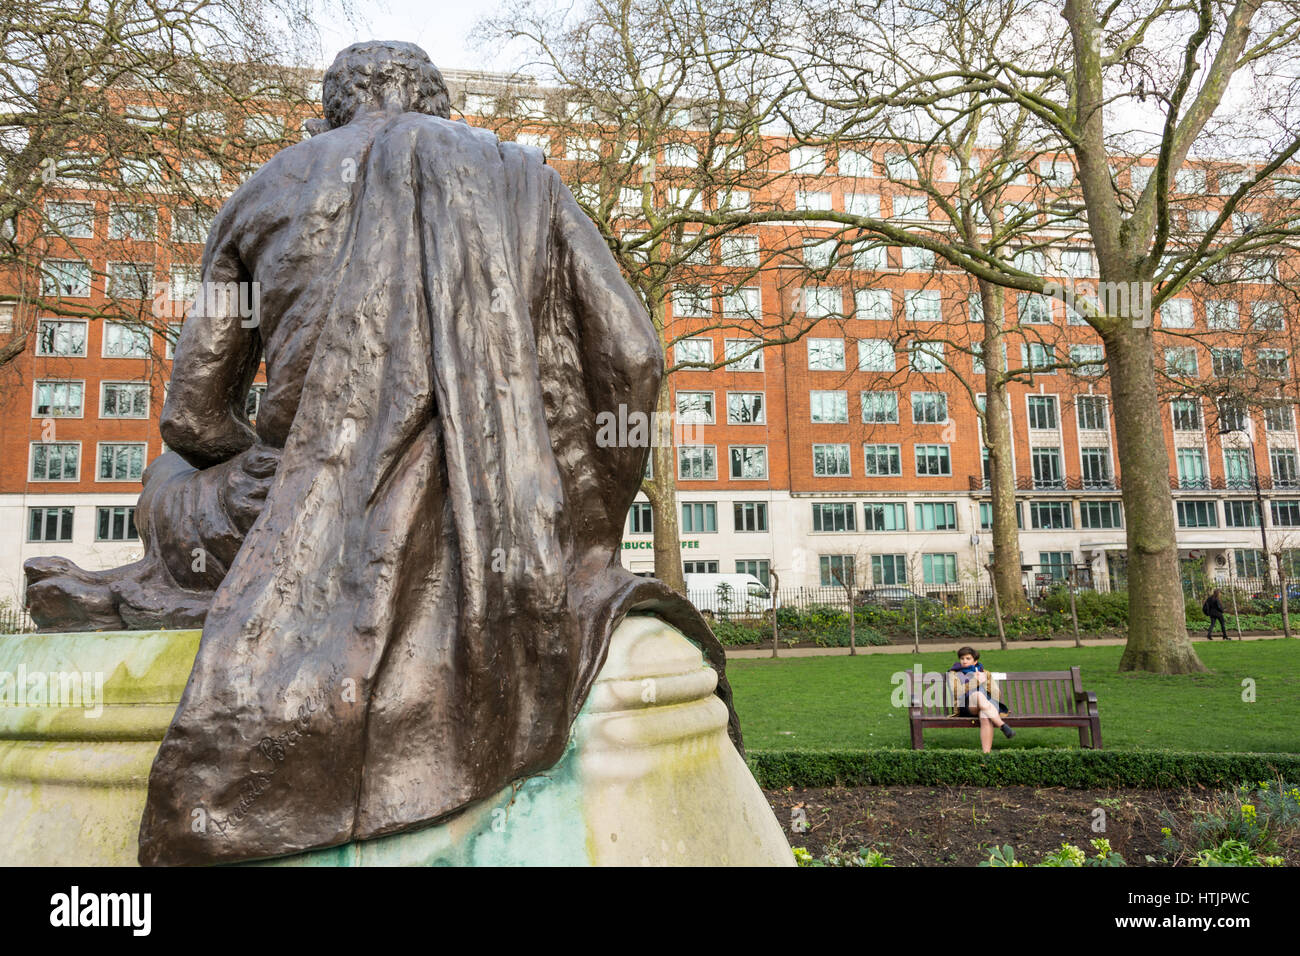 Statue de Mahatma Gandhi, sculptée par Fredda, brillant à Tavistock Square, Londres, Royaume-Uni. Banque D'Images